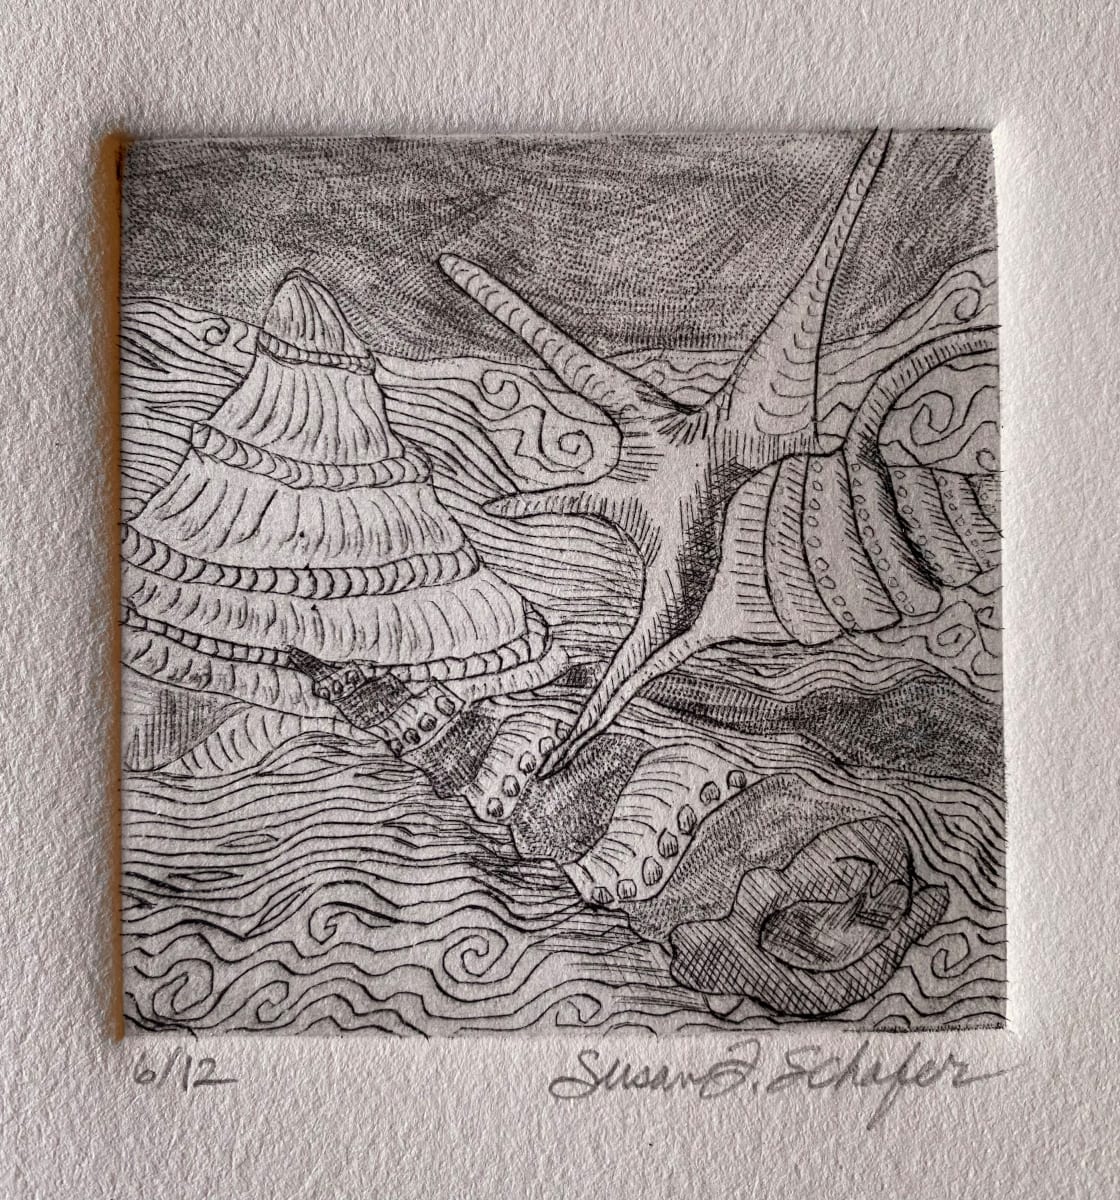 Three Shells, limited edition 6/12 by Susan F. Schafer 